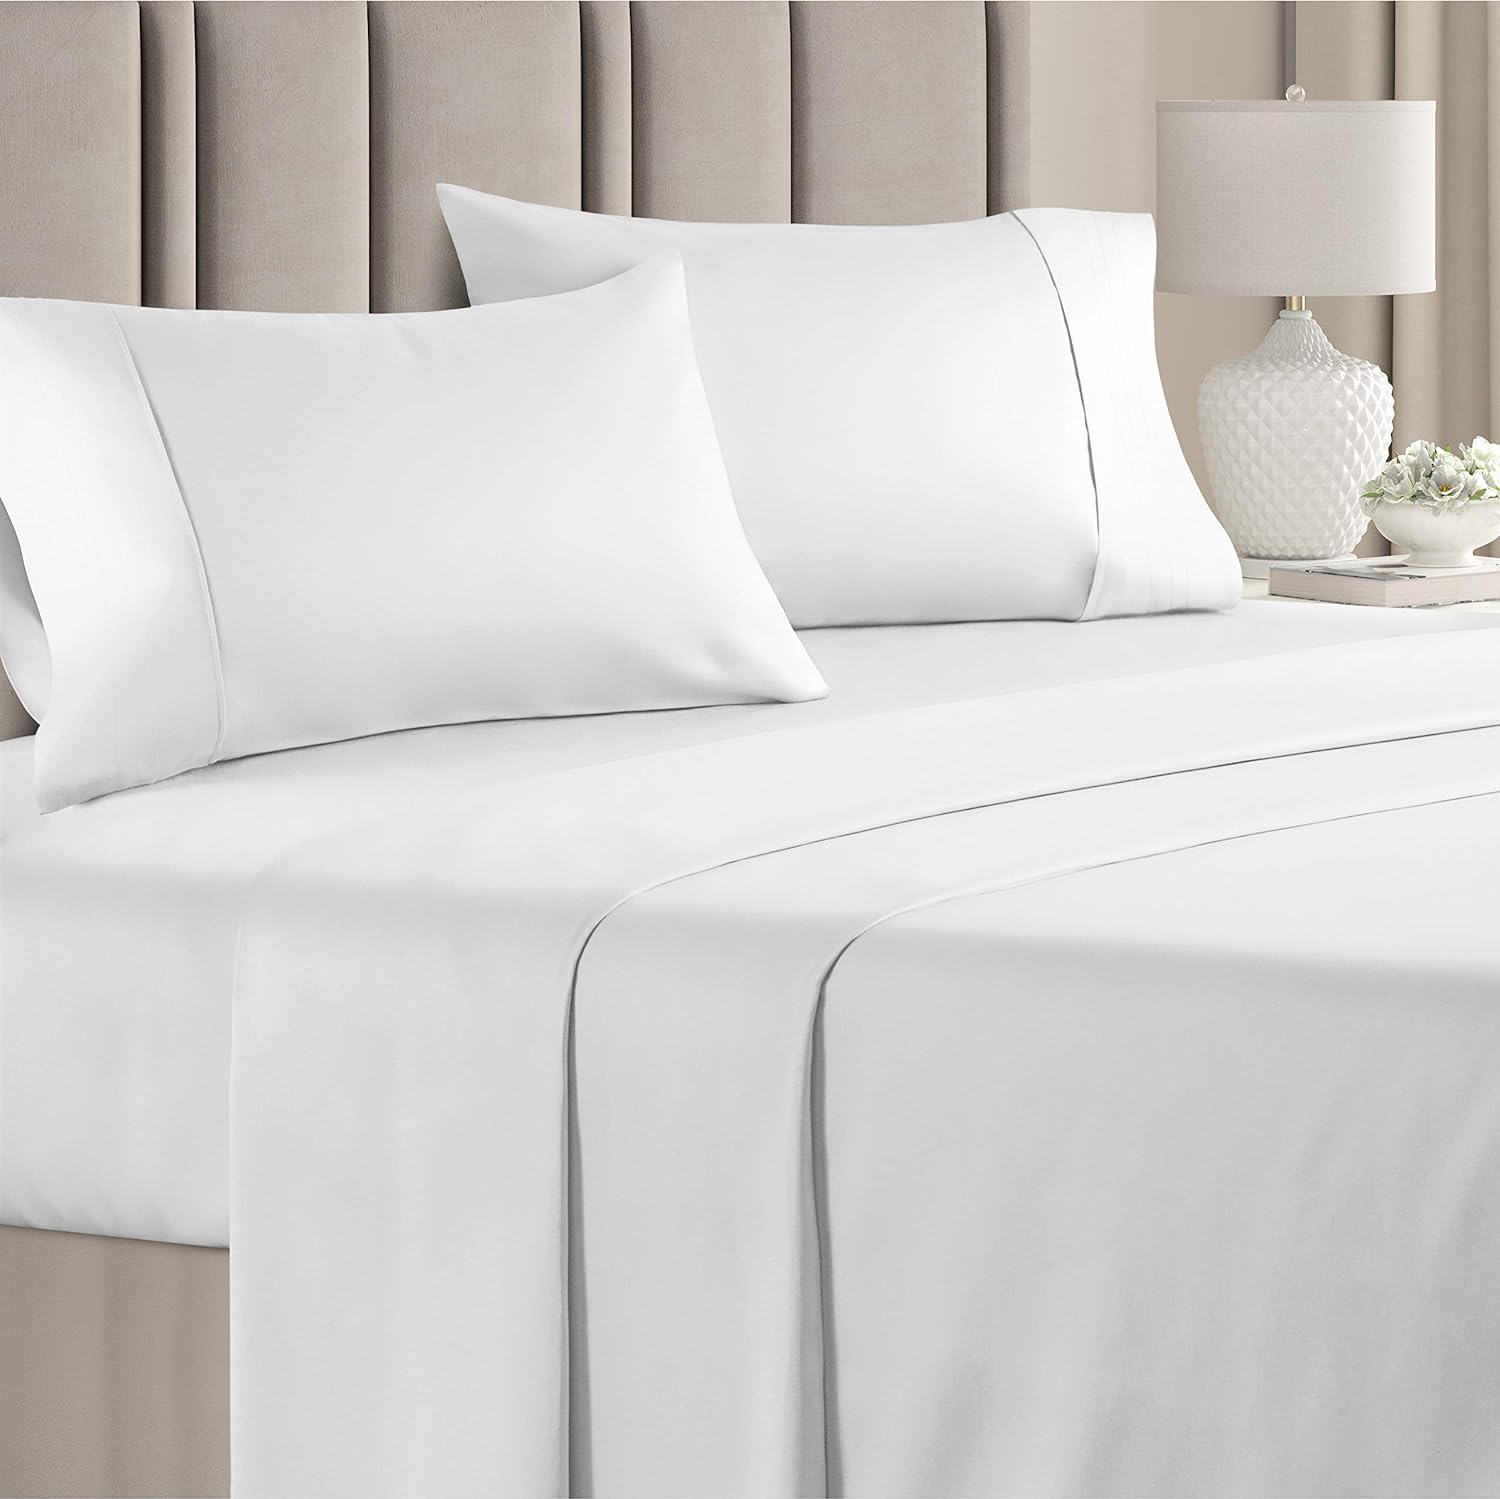 Single Size Silky Touch 1800 TC 3-piece Bed Sheet Set Black Grey White Blue Burgundy Color